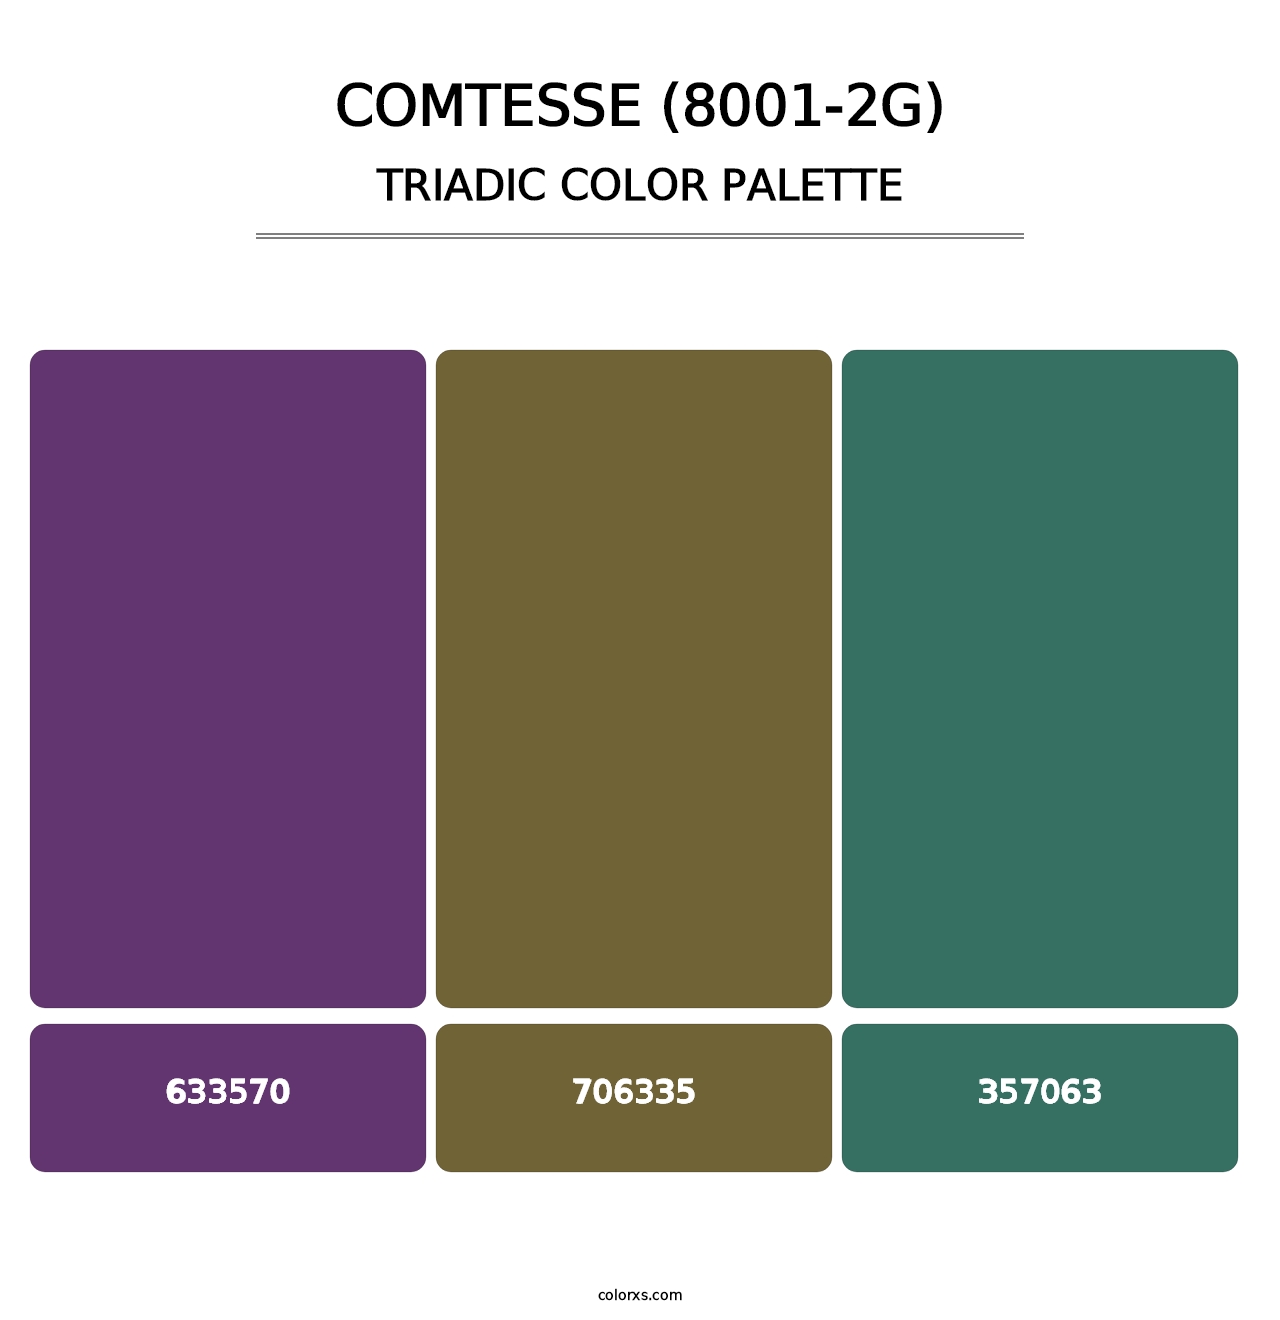 Comtesse (8001-2G) - Triadic Color Palette